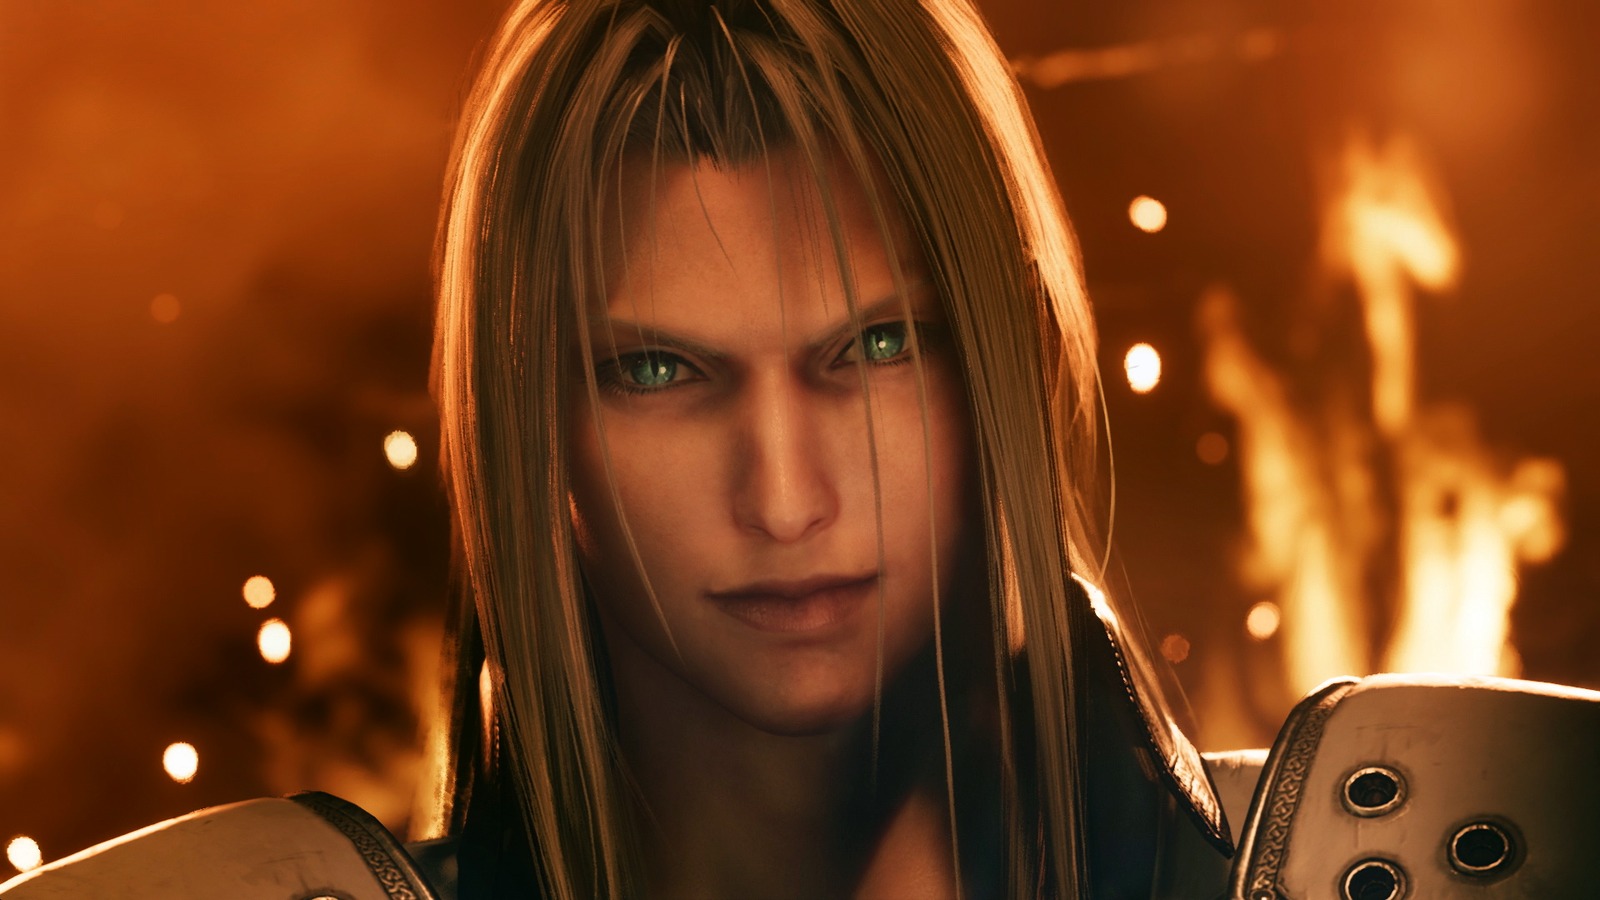 Final Fantasy 7 Remake Intergrade modder makes Sephiroth Ronald